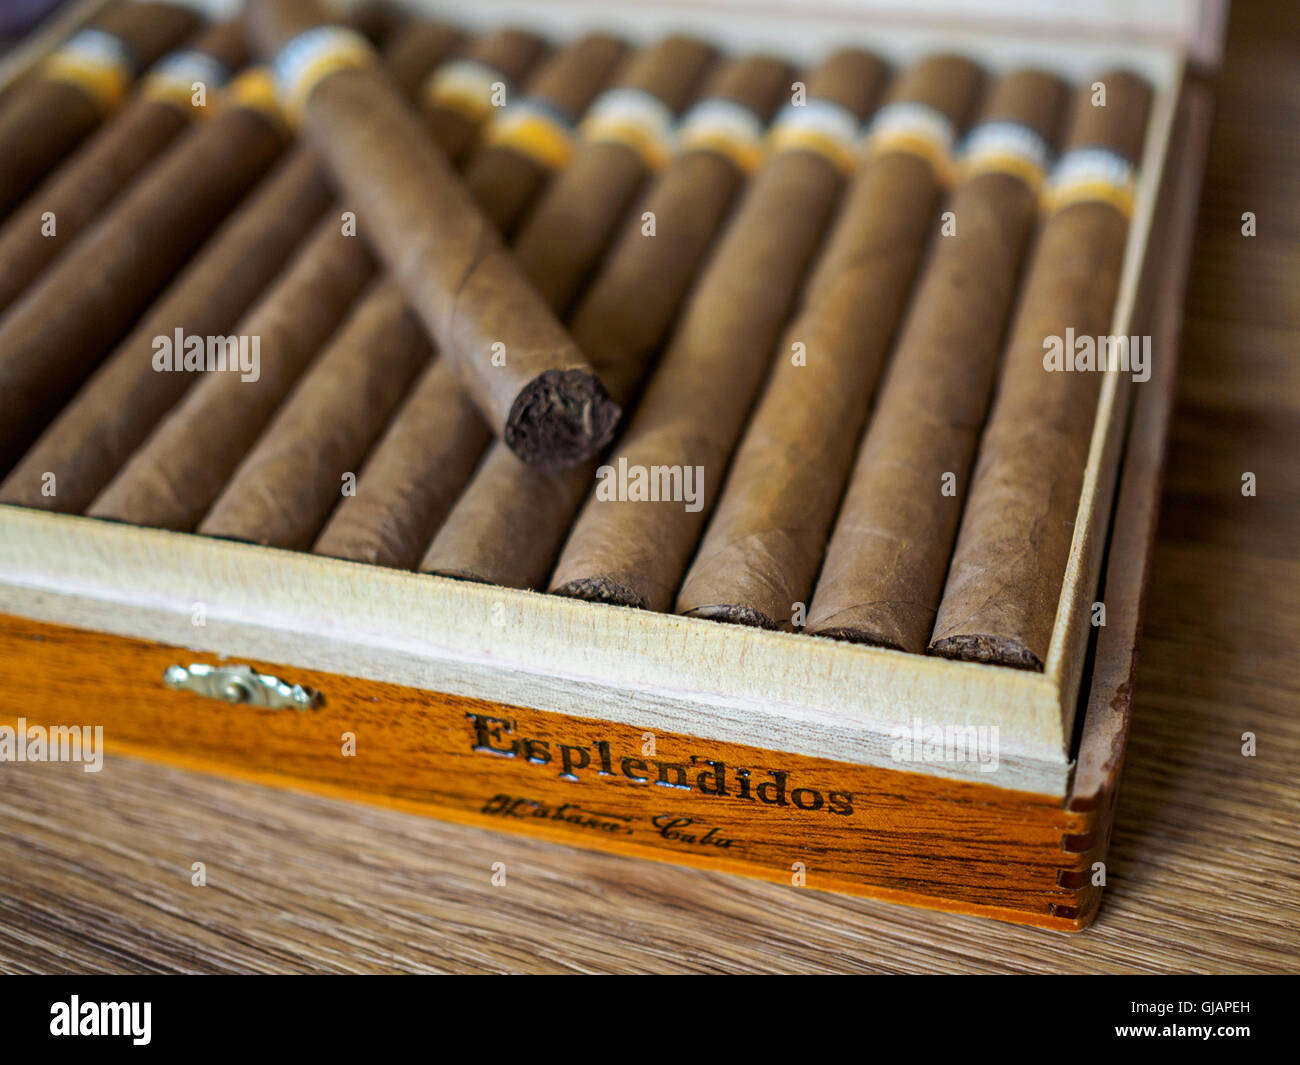 Sigaro cubano scatola contenente Cohiba Esplendios sigari, fatta a mano in  Cuba Foto stock - Alamy